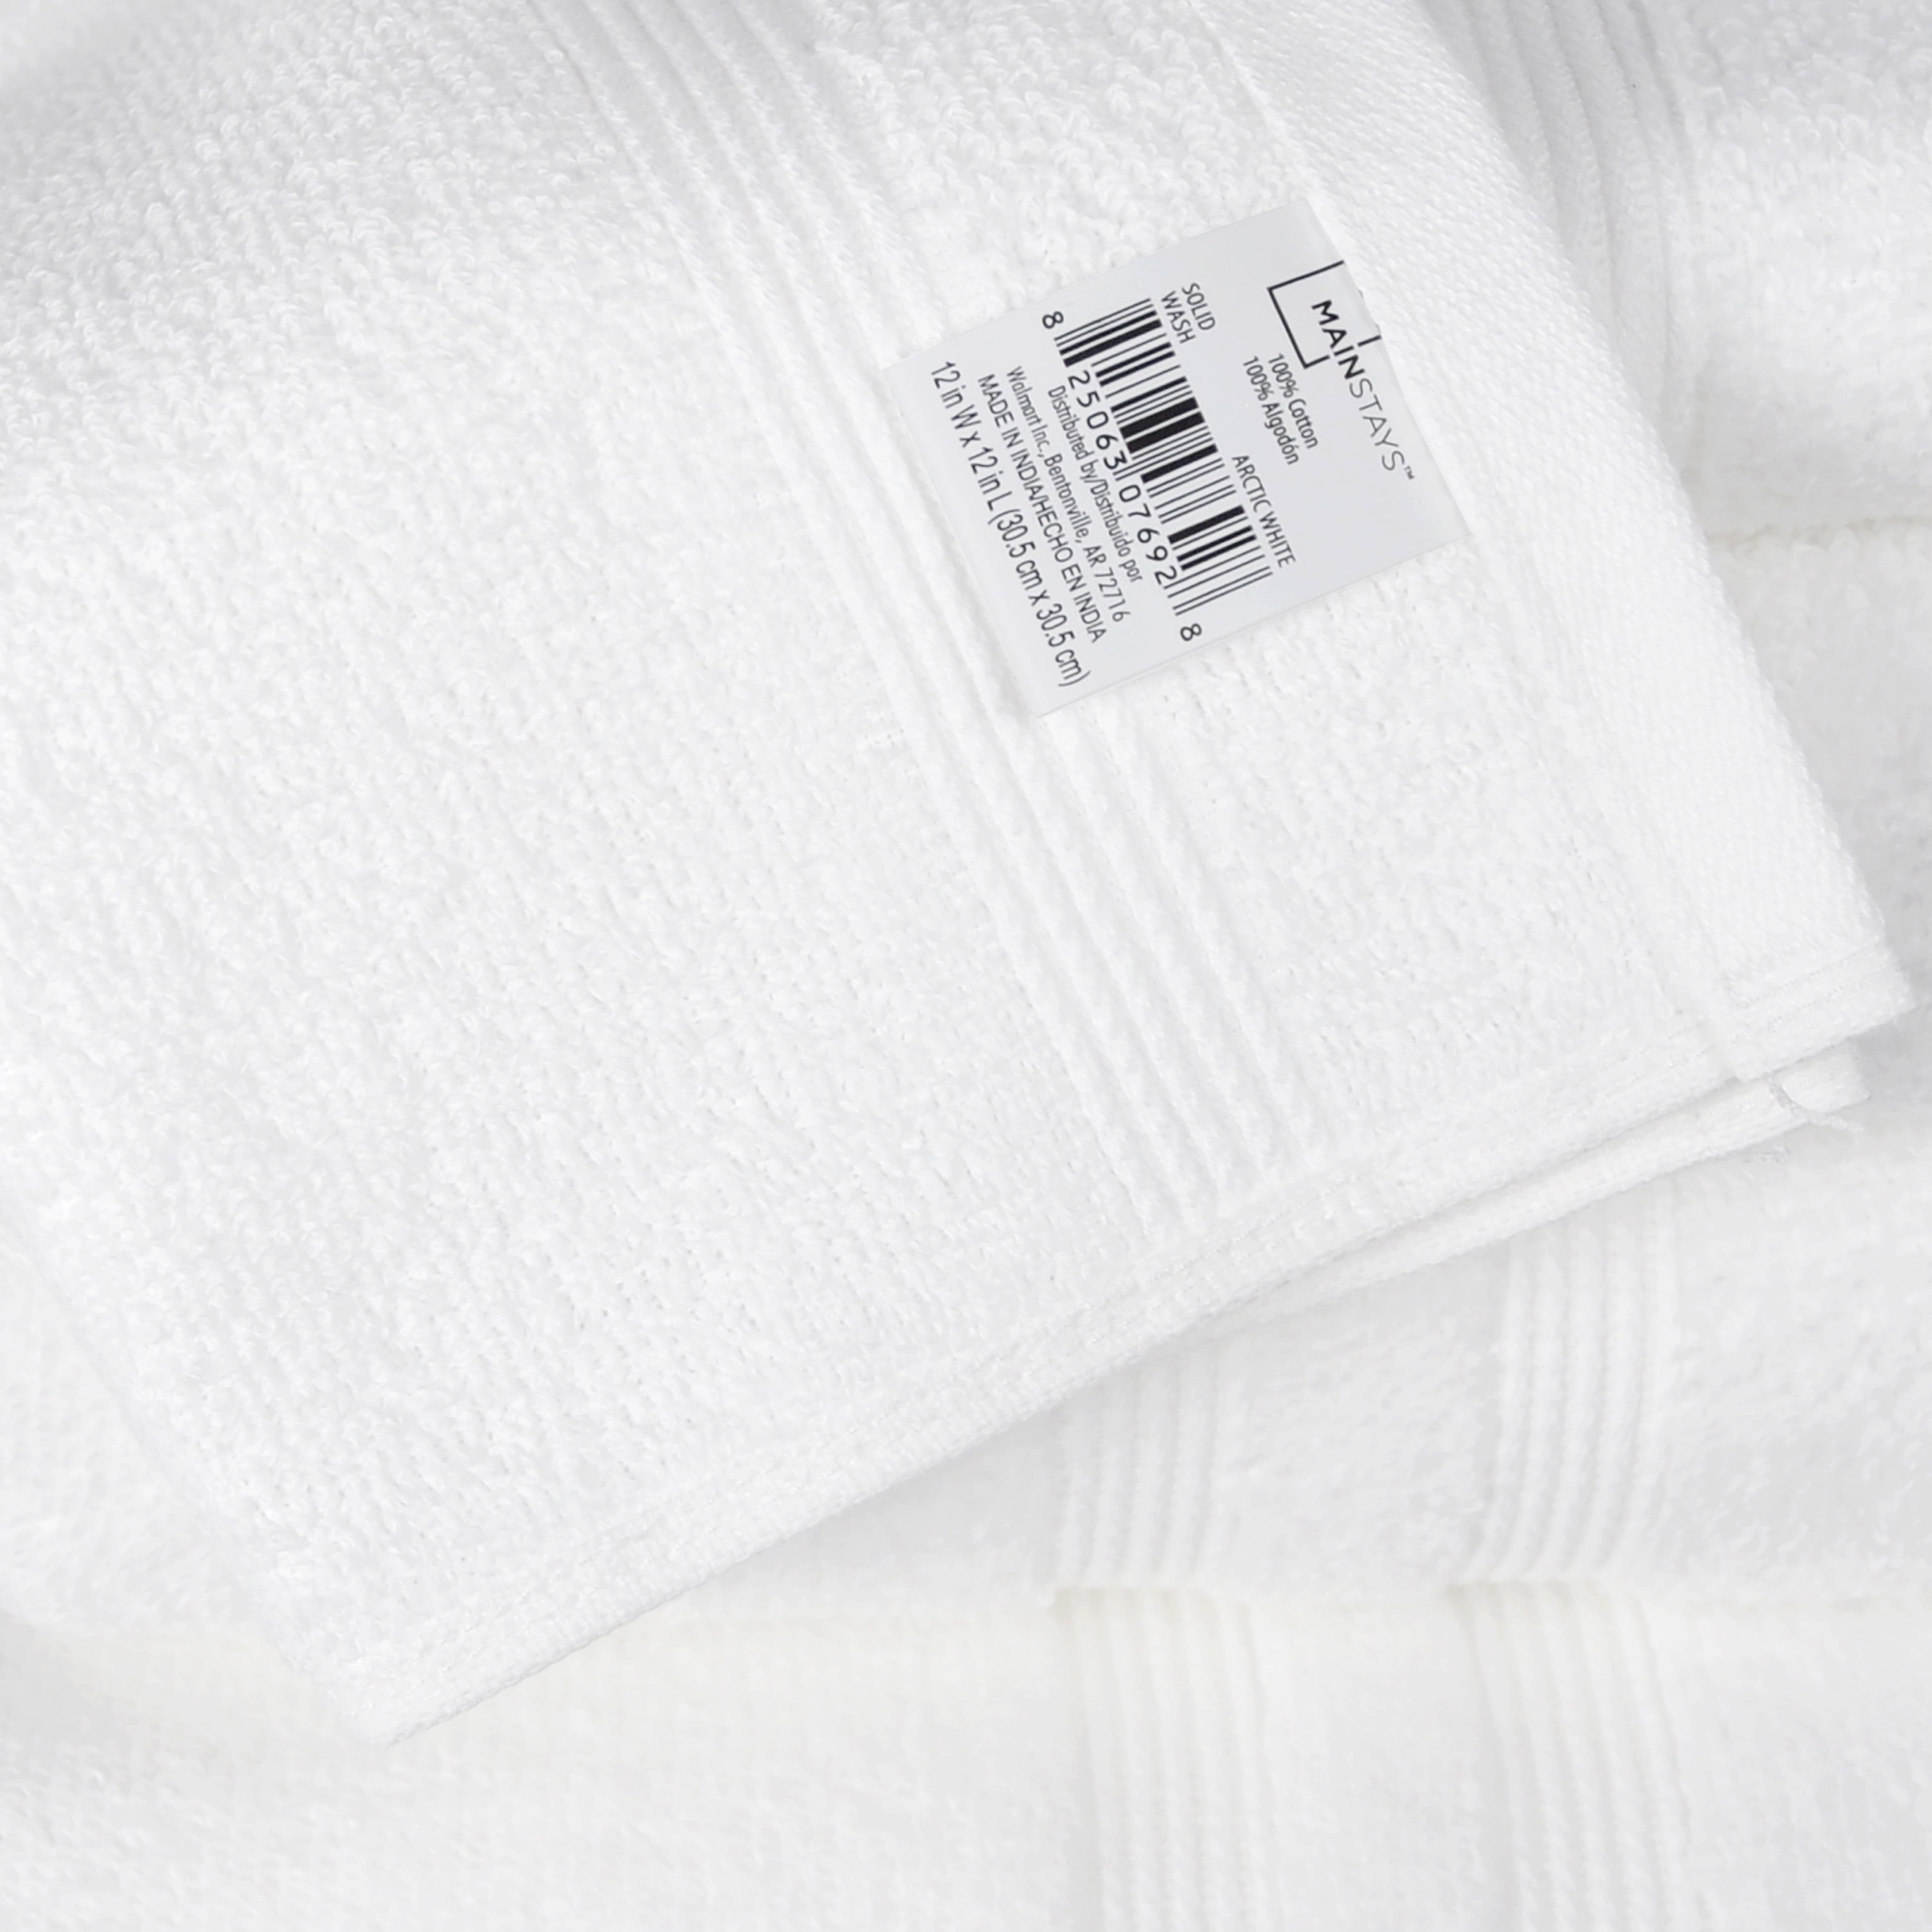 Mainstays Performance 2-Piece Towel Bath Sheet Set, Textured Arctic White